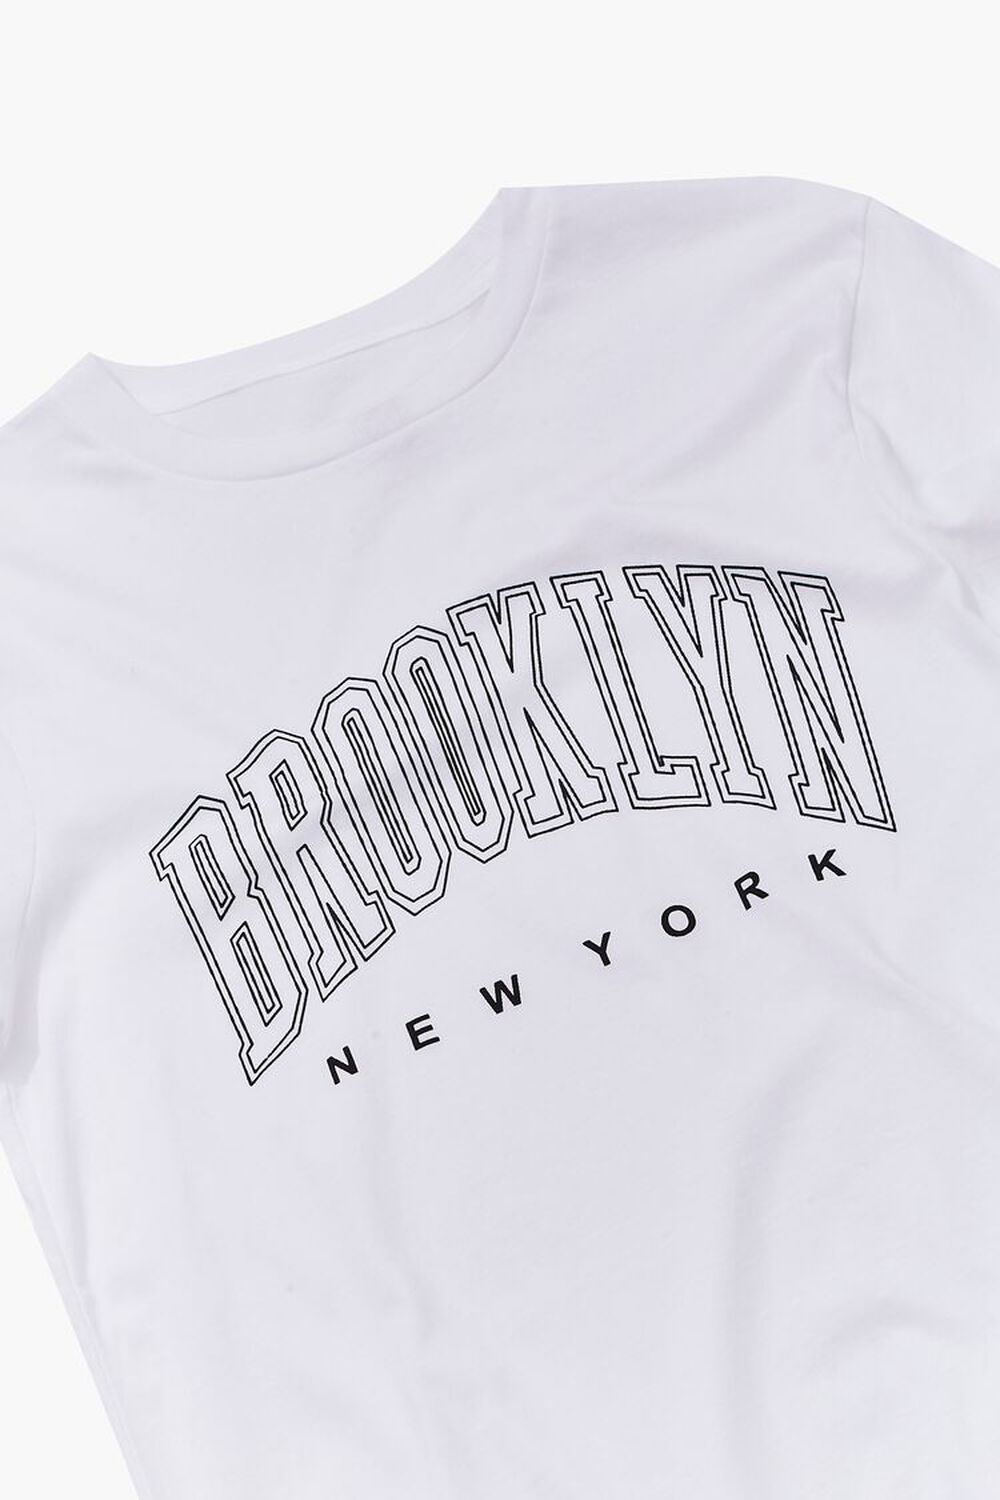 Brooklyn New York Graphic Tee, image 3